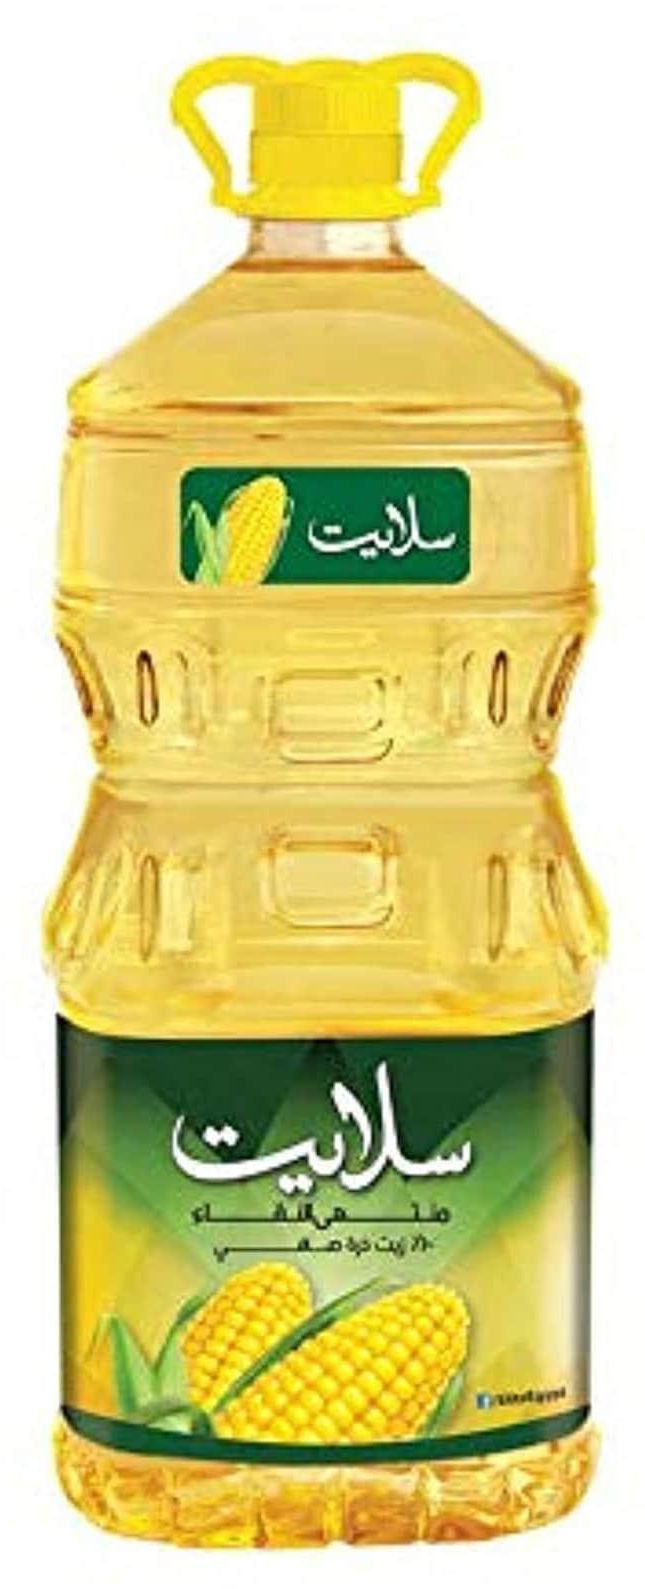 Slite Corn Oil - 2.2 Liters